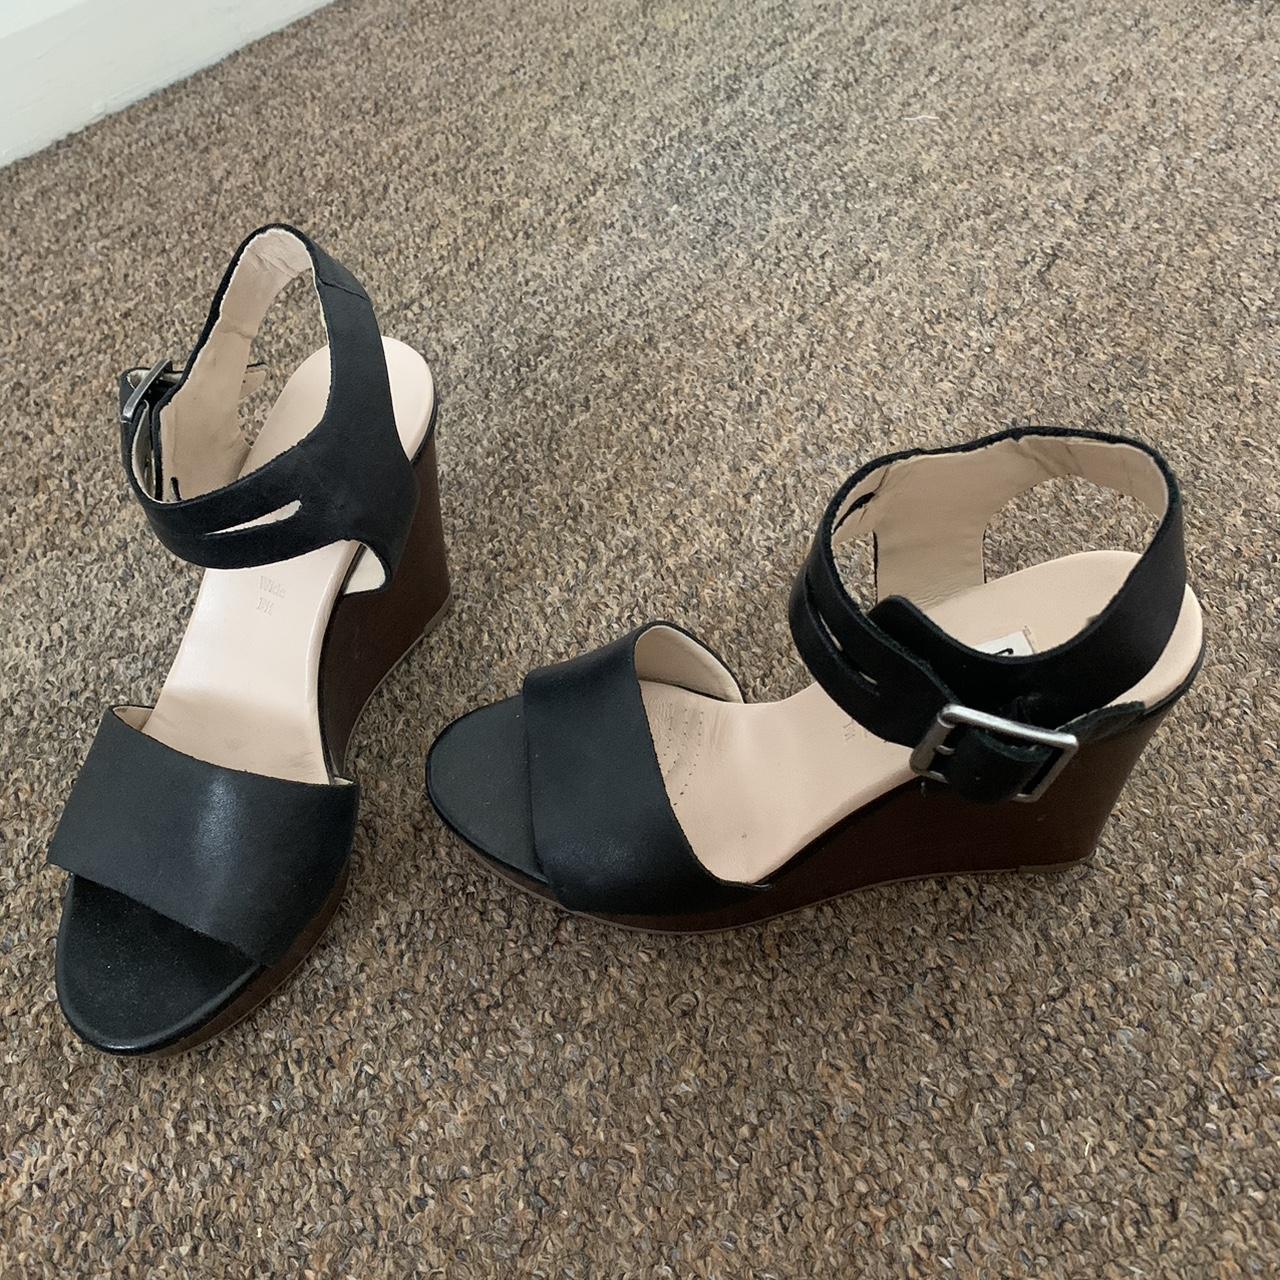 Clarks Bendables Slide Sandals for Women for sale | eBay